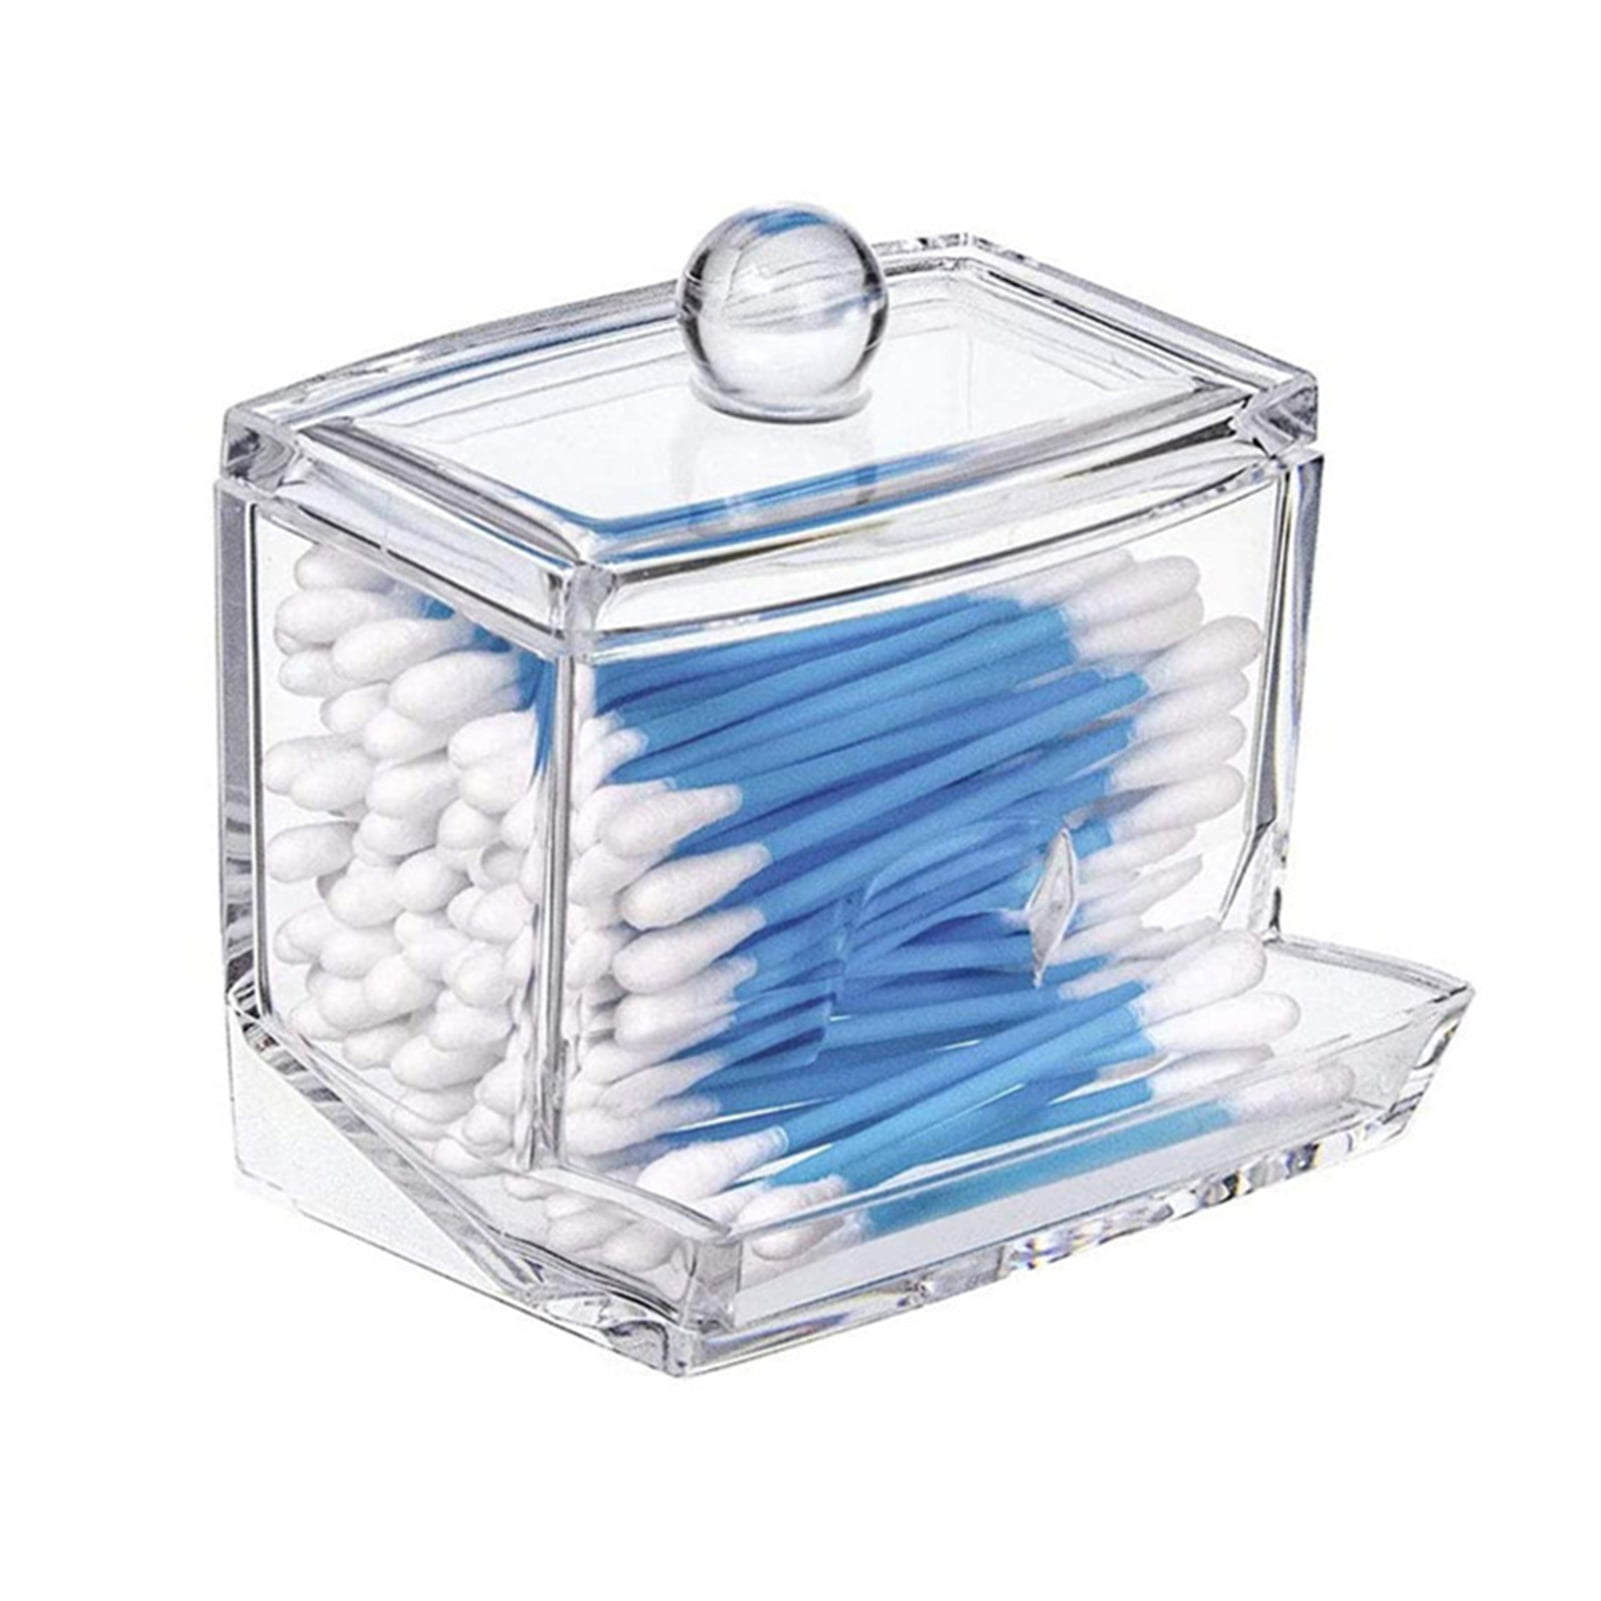 4X QTIP HOLDER Dispenser with Lids Acrylic Bathroom Jars Cotton Swab  Storage .e $18.59 - PicClick AU